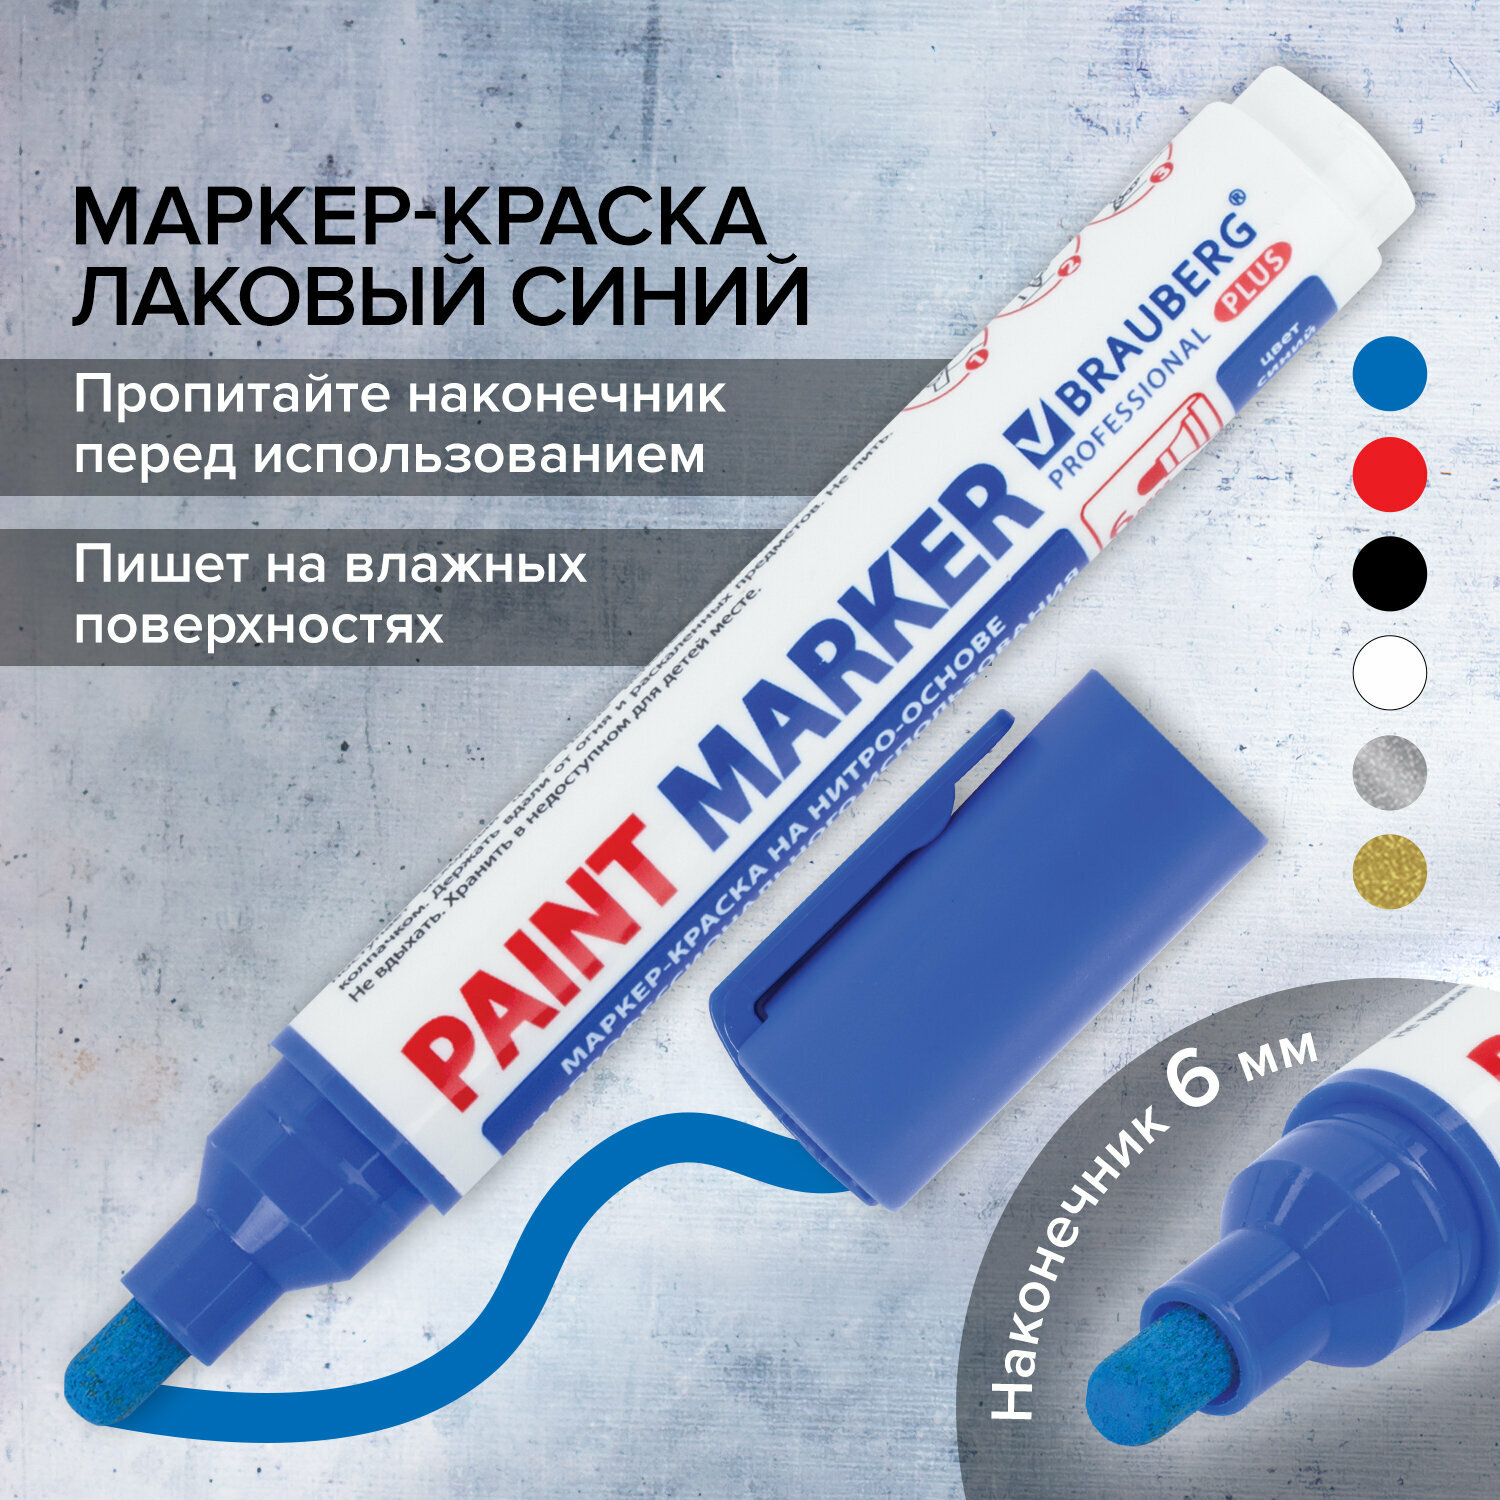 Маркер-краска лаковый paint marker по стеклу / бетону / авто 6 мм, Синий, Нитро-основа, Brauberg Professional Plus Extra, 151453